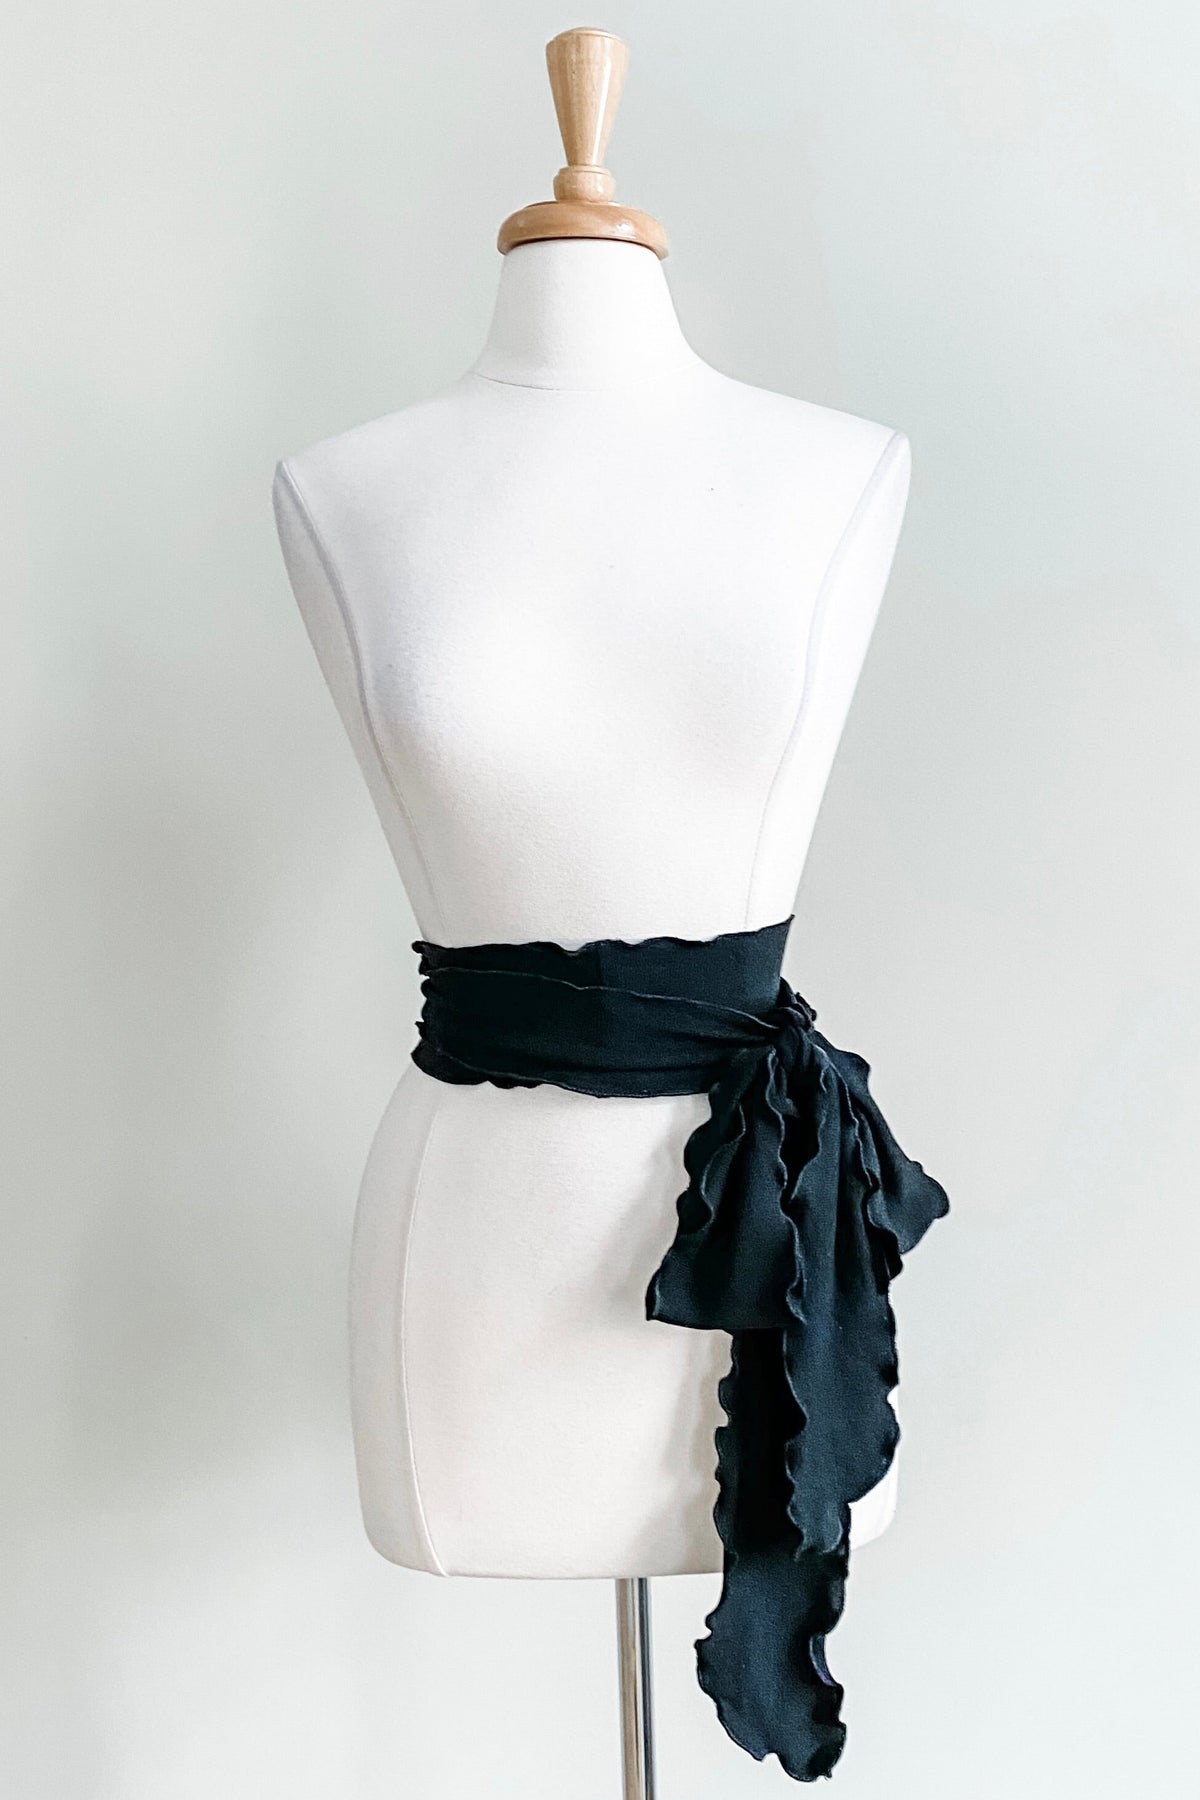 Diane Kroe - Scalloped Sash Belt in Infinity Knit (Black)